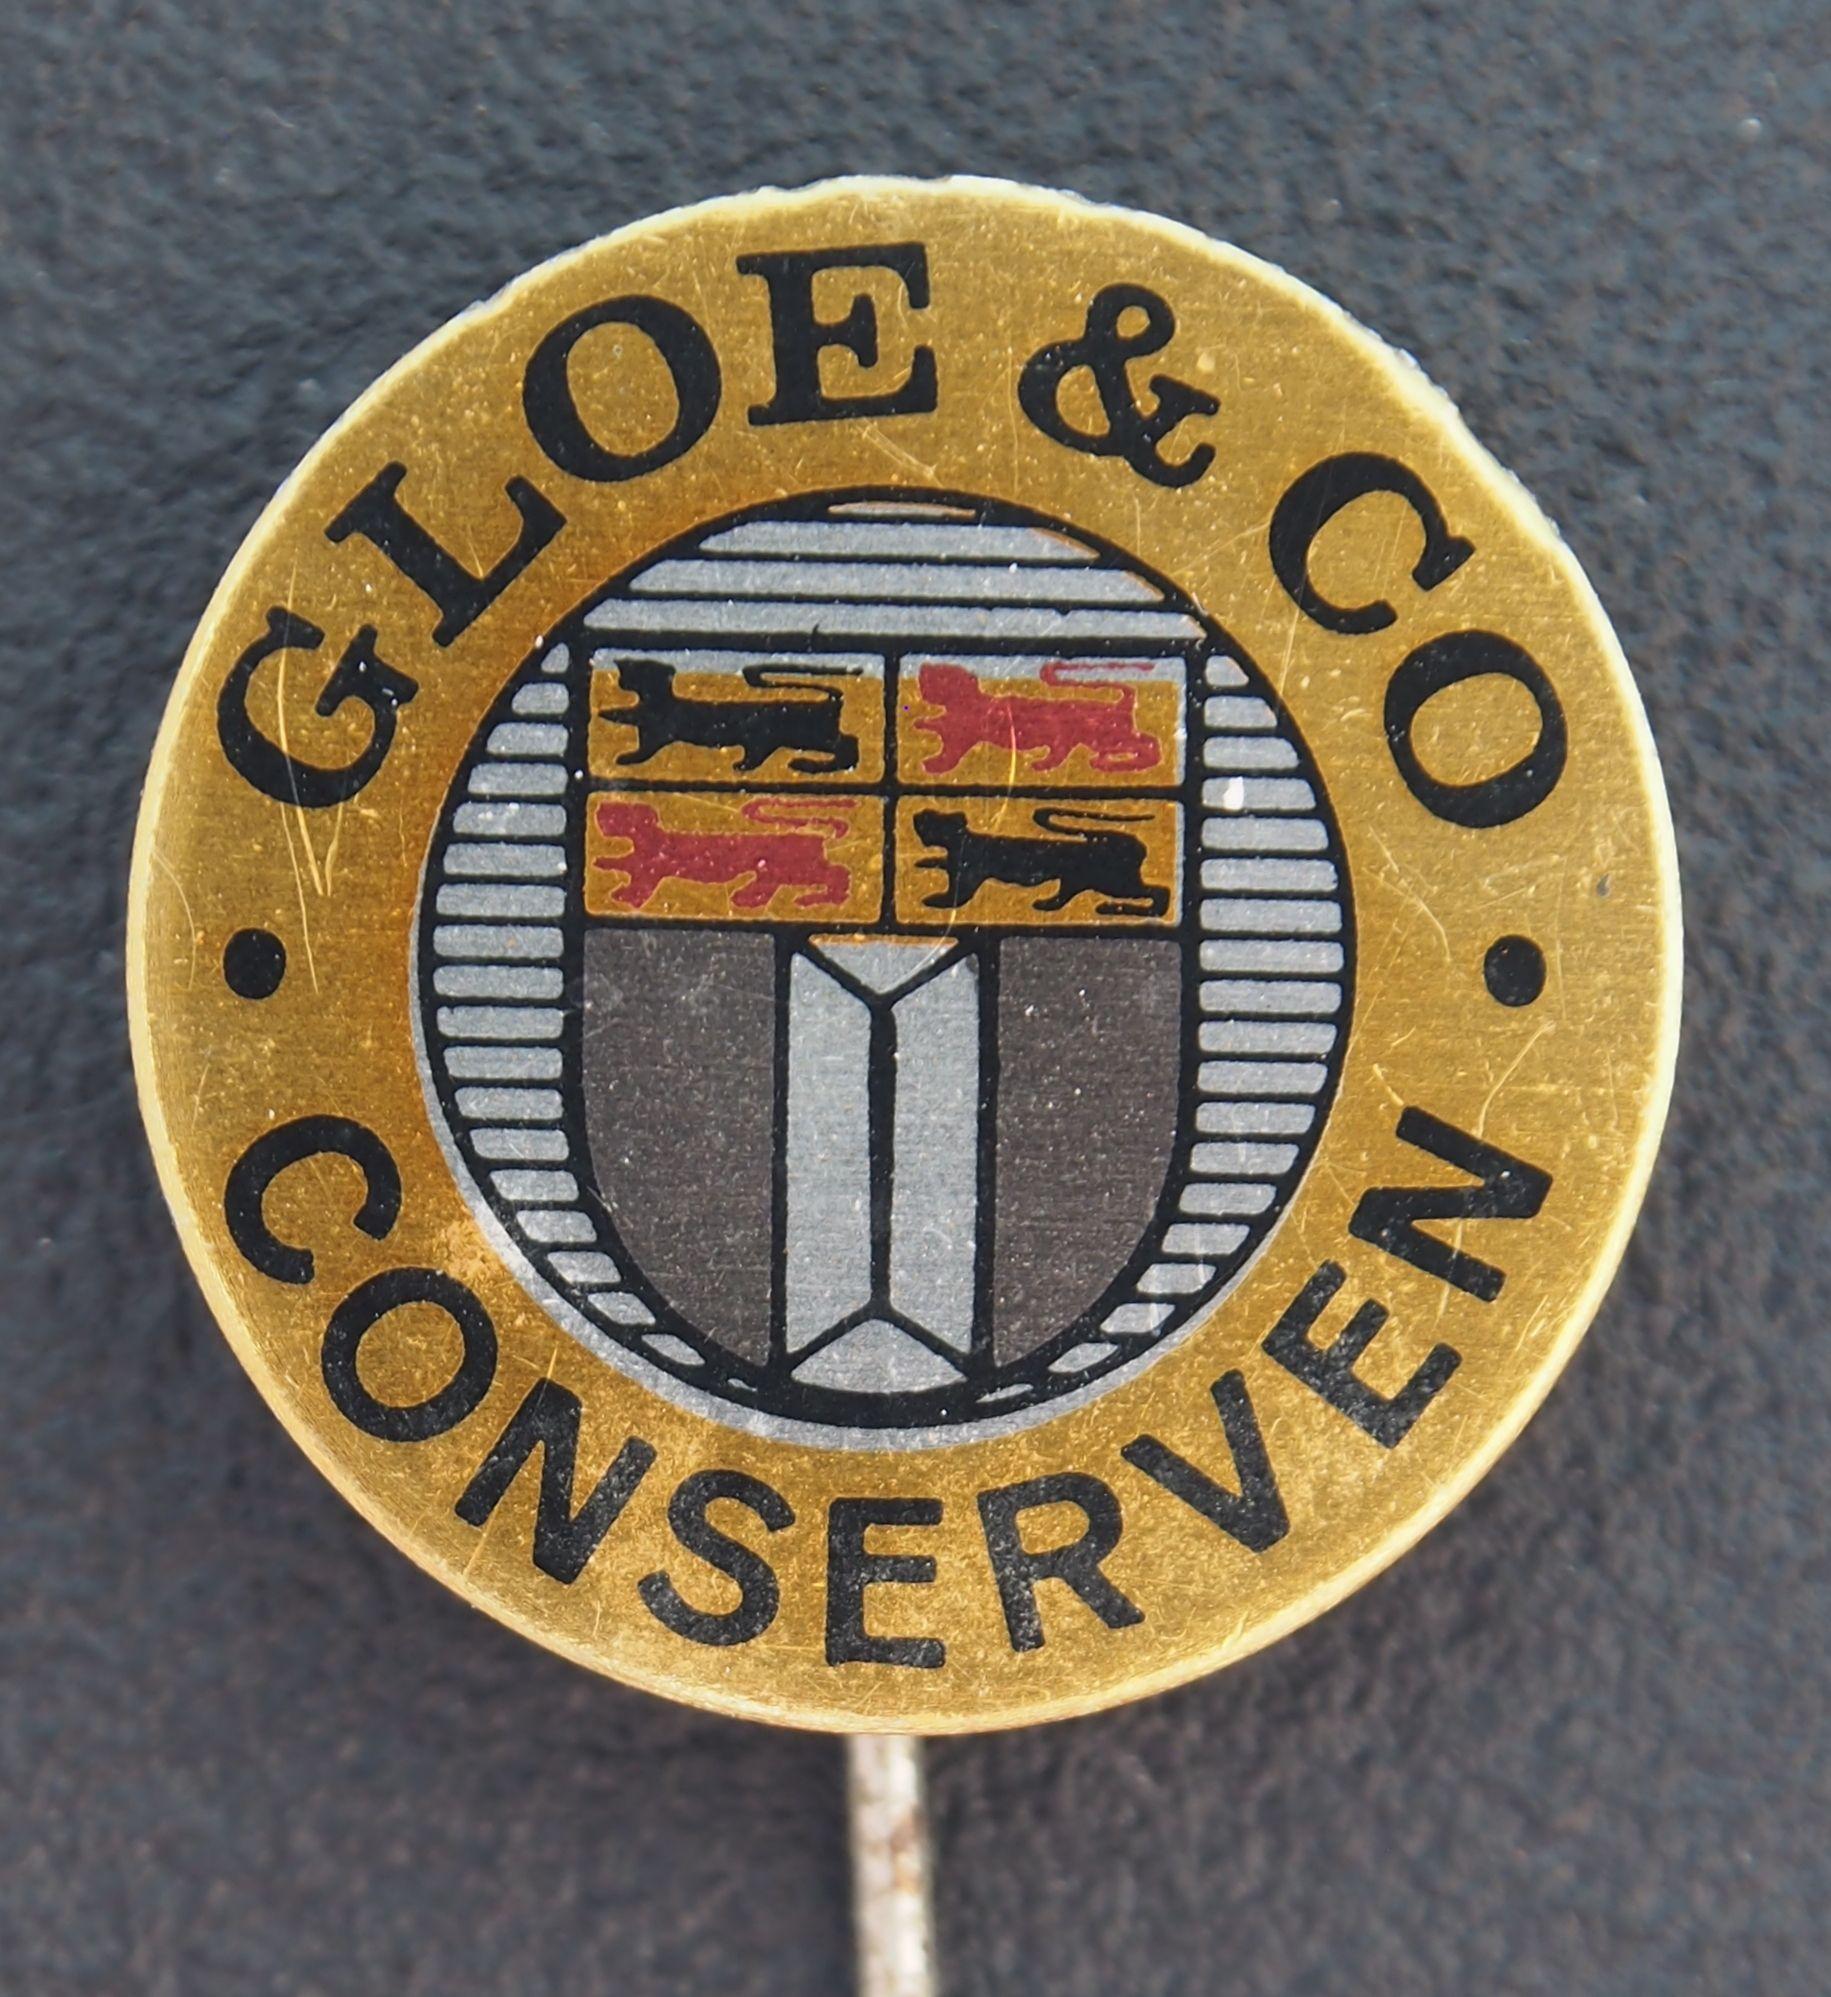 Gloe Logo - Gloe & Co conserven